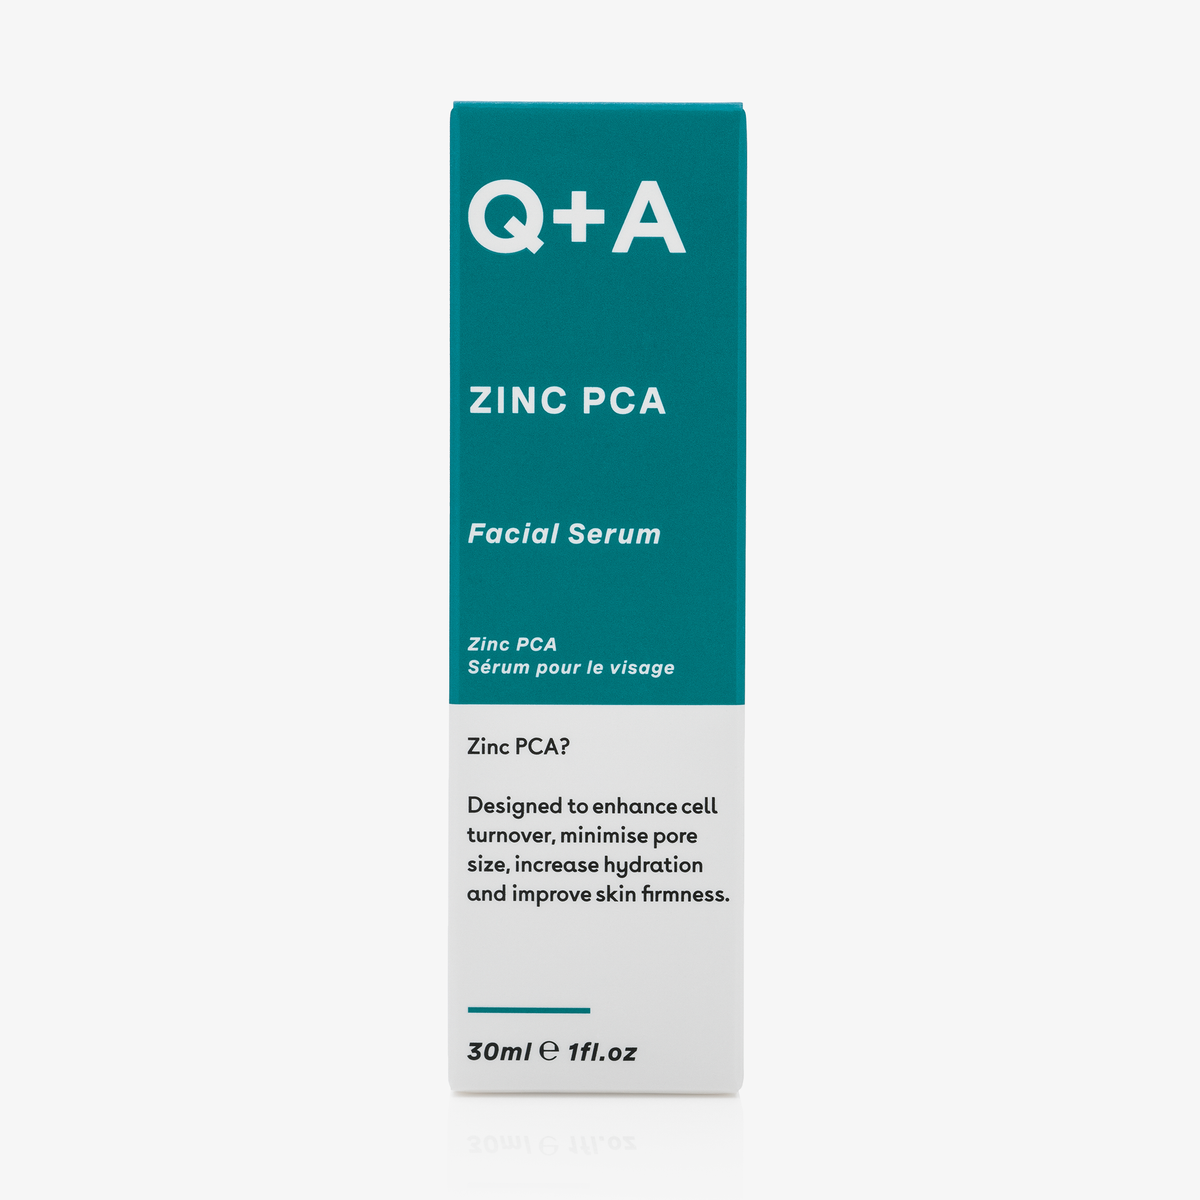 Zinc PCA Facial Serum 30ml